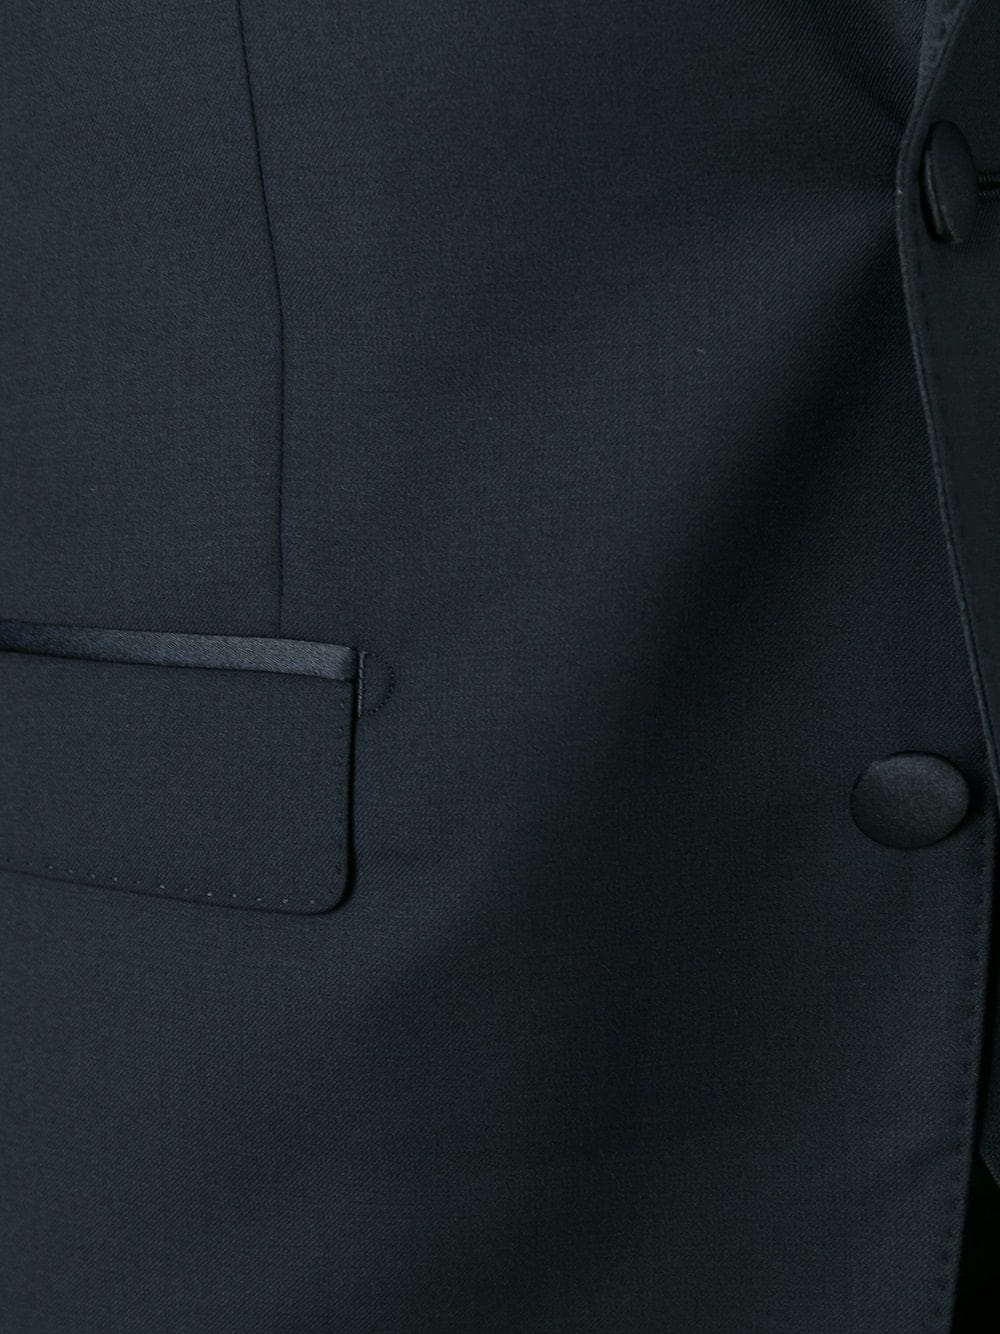 Dolce & Gabbana Two-Piece Suit Blazer and Vest